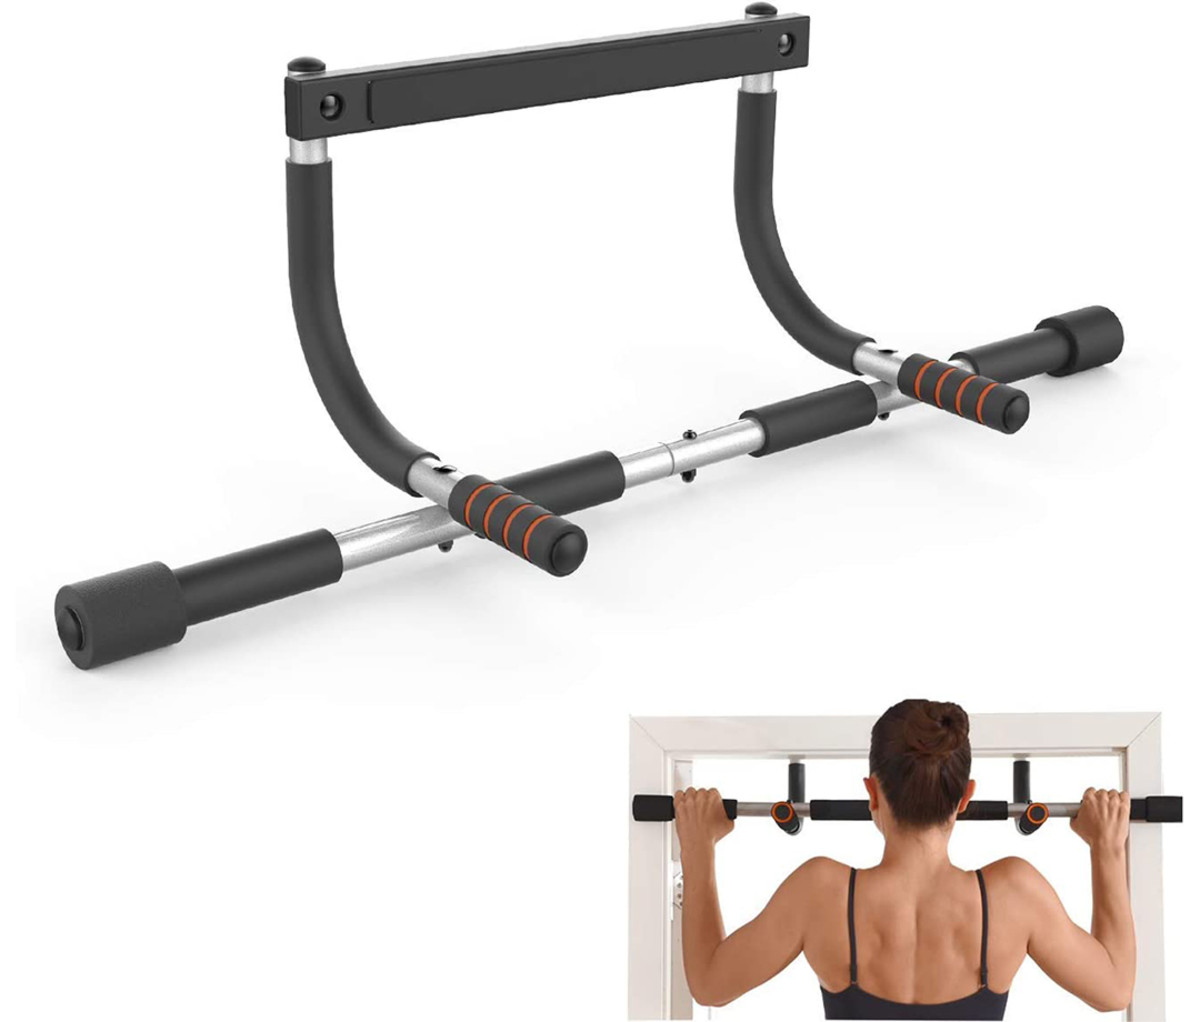 VGEBY1 Pull Up Bar Multiple Purpose Door Frame Bar for Fitness Bodybuilding Indoor Home Gym Equipment 